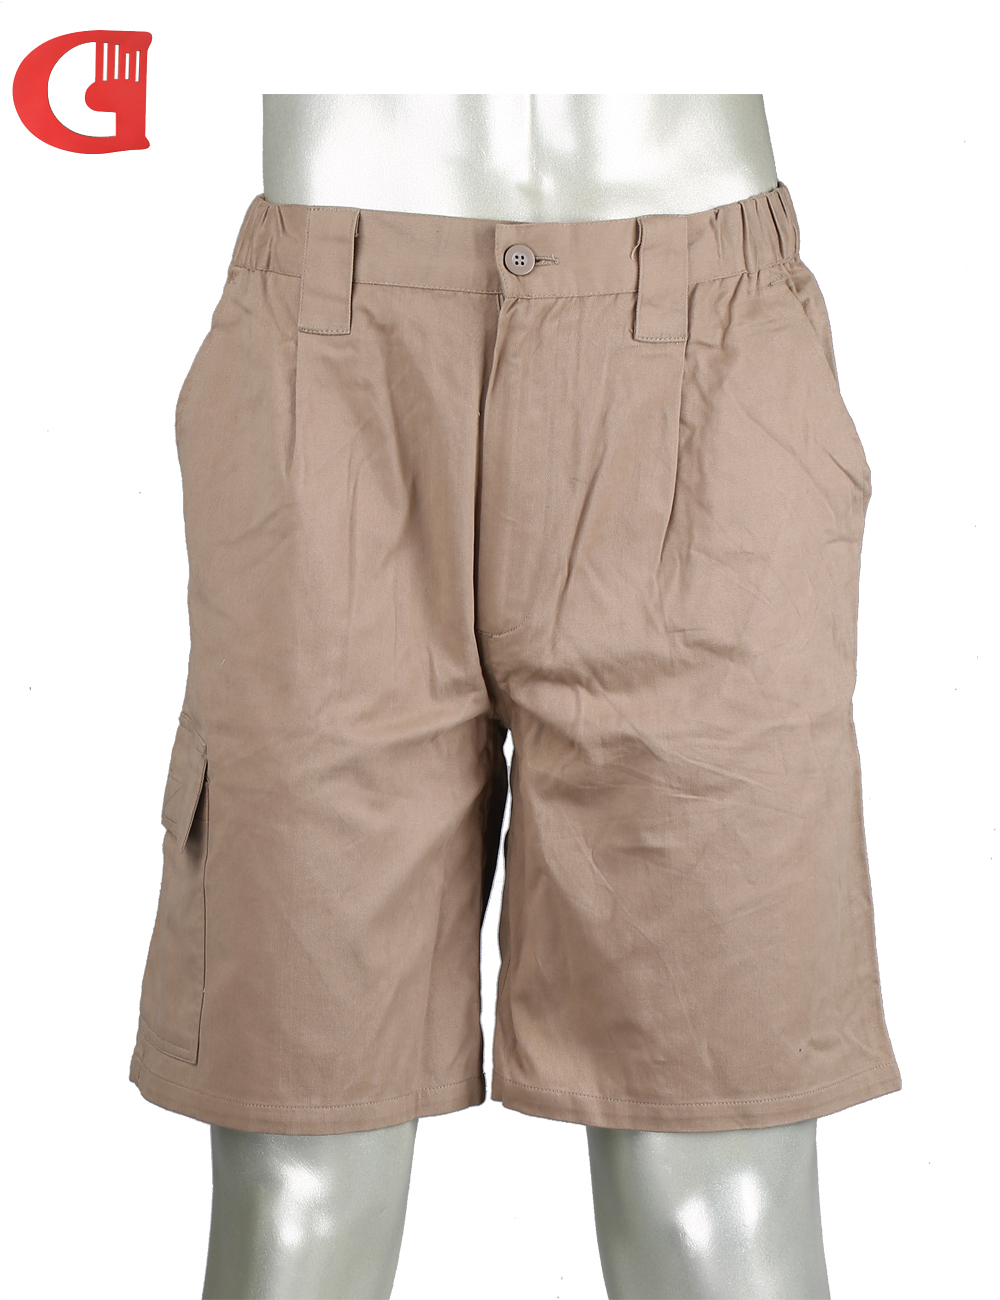  Wholesale Cargo Short Trousers for Men Shorts Multi Pocket Pants